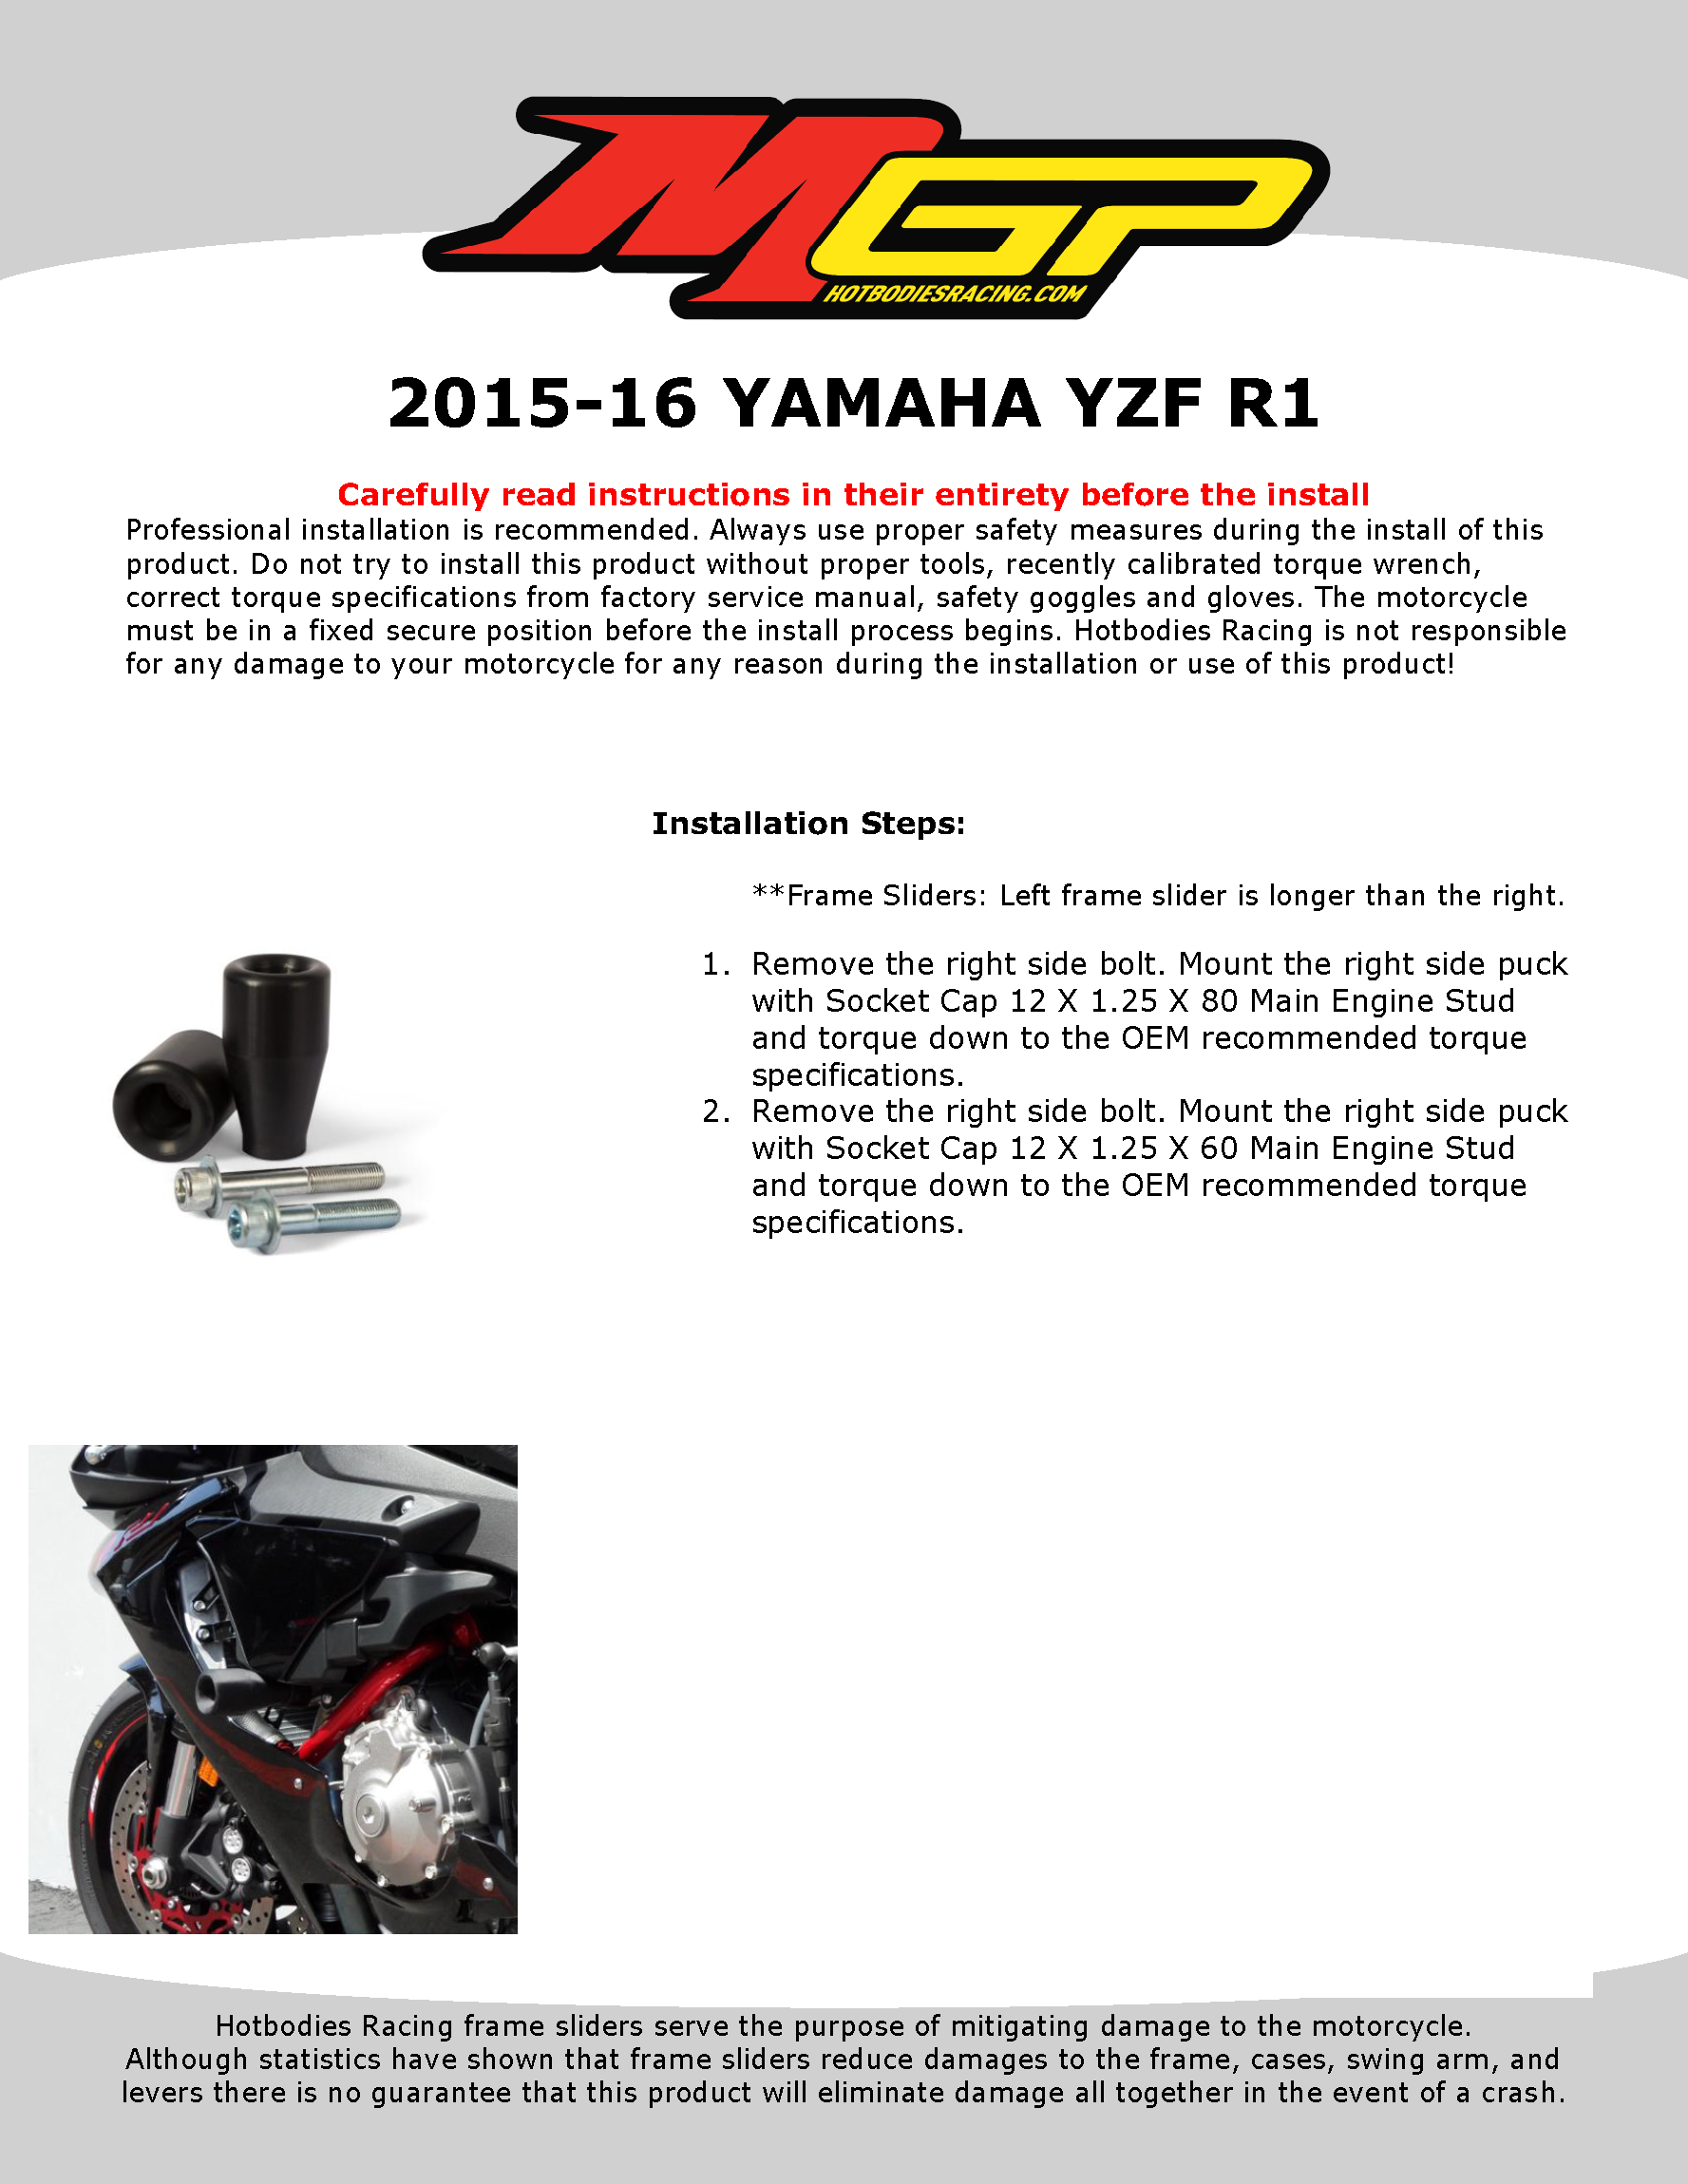 

2015-16 YAMAHA YZF R1 Frame Sliders Installation

